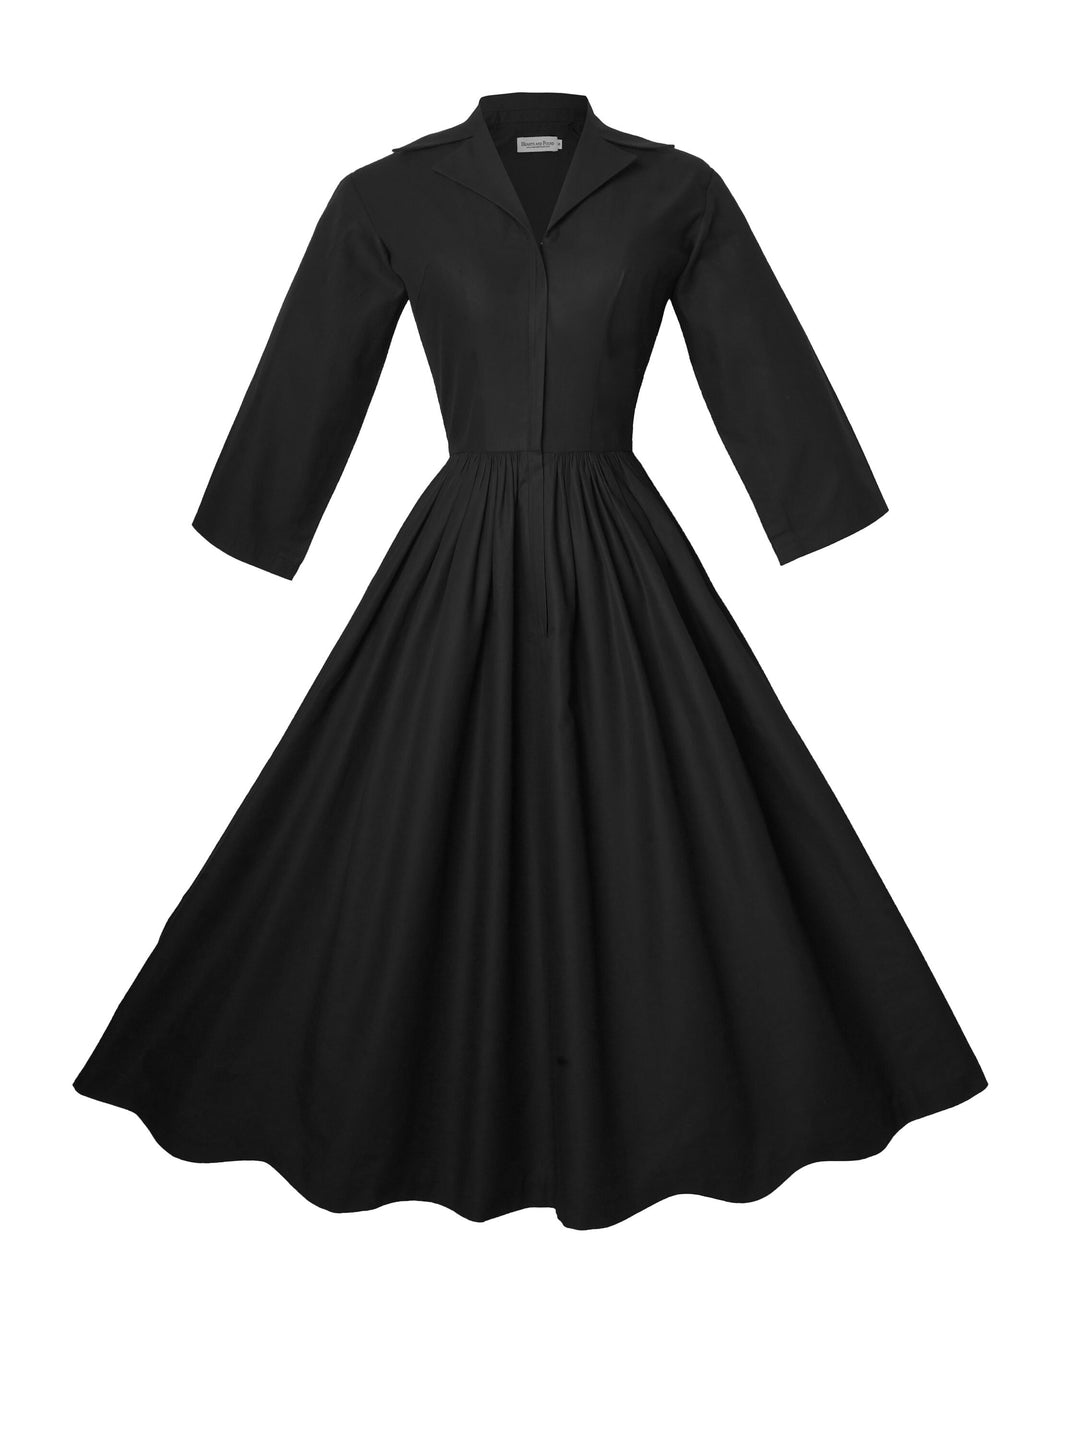 RTS - Size S - Natalie Dress in Raven Black Cotton